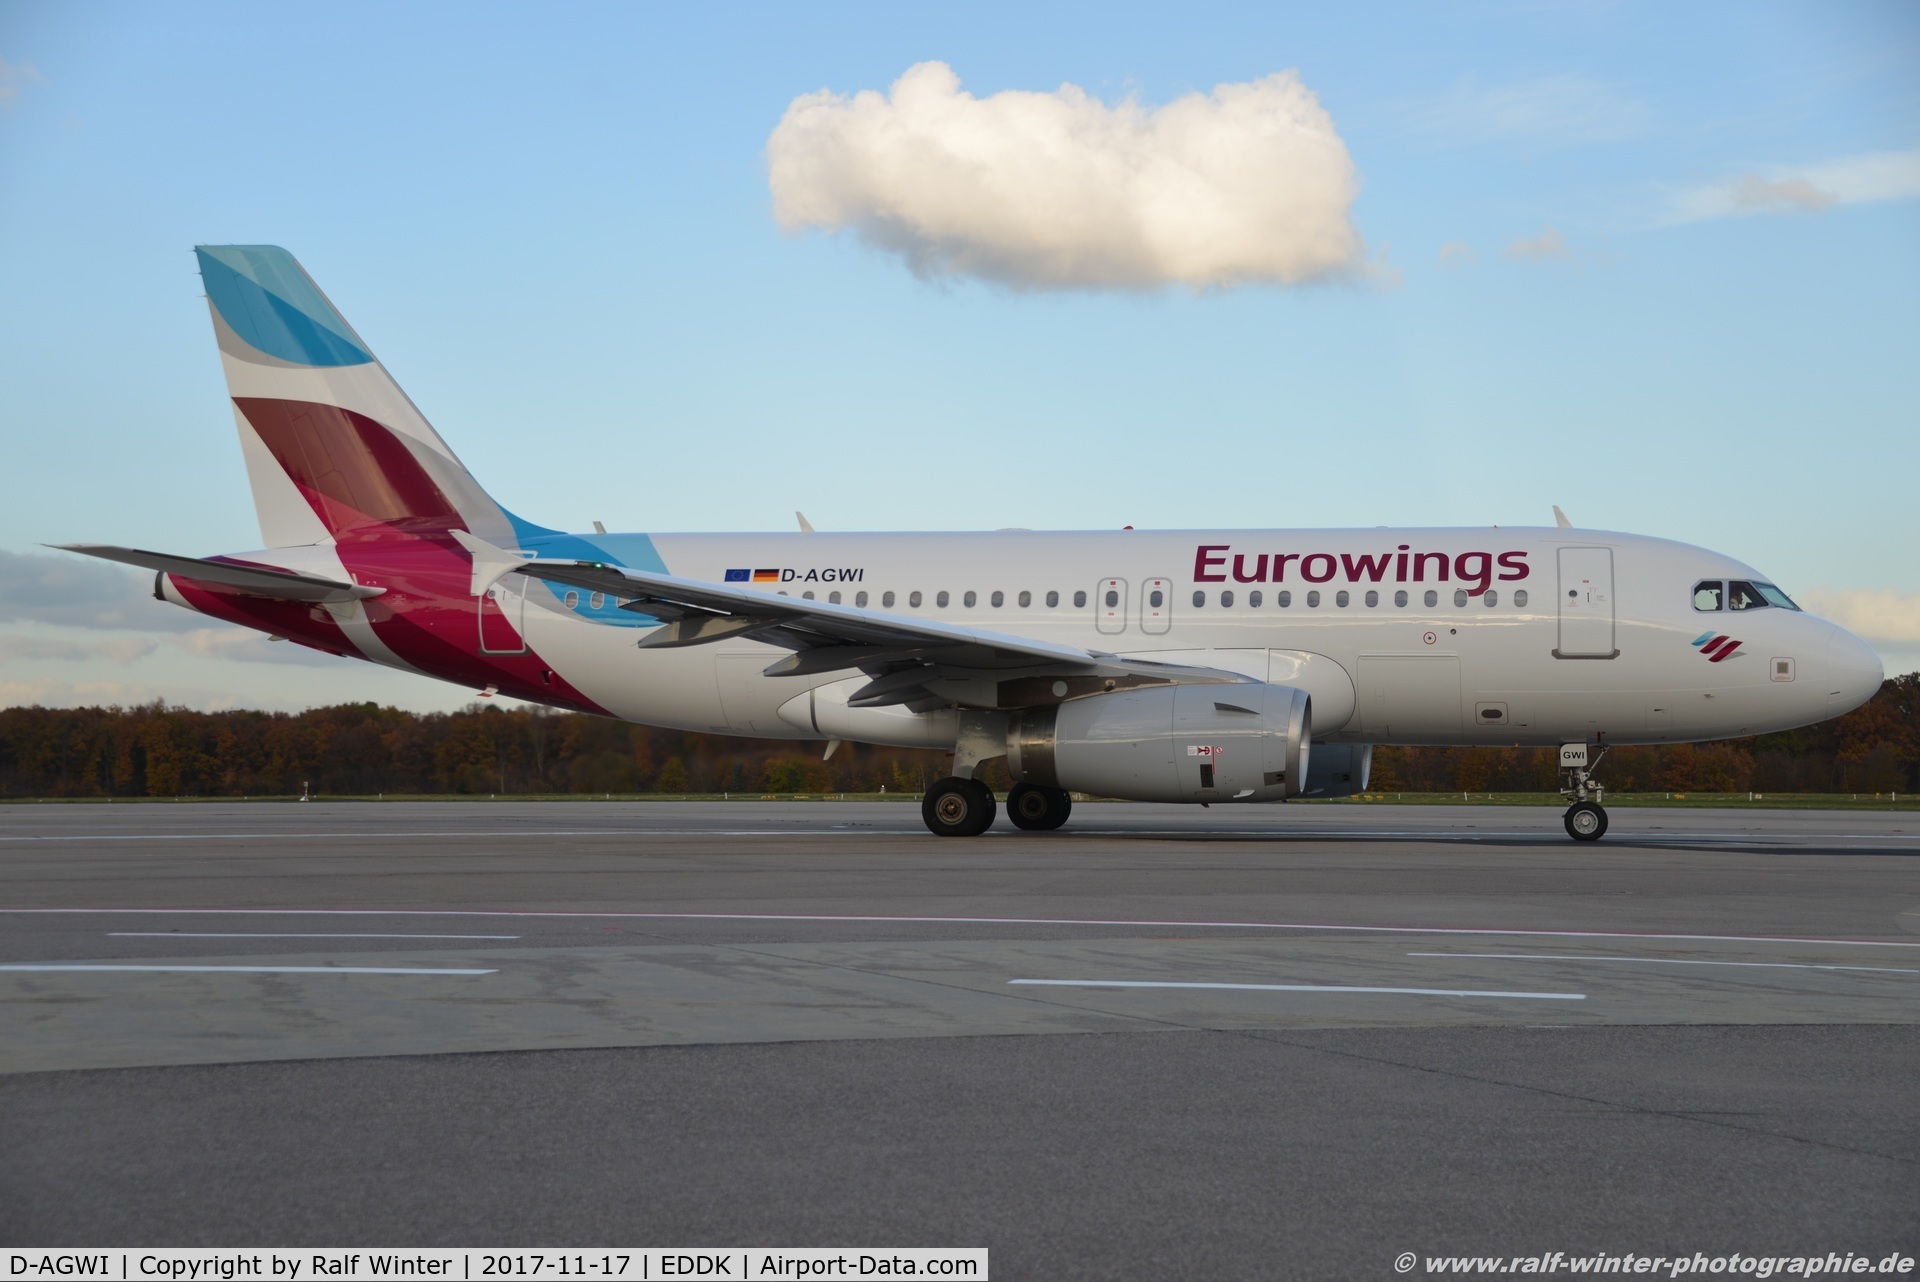 D-AGWI, 2008 Airbus A319-132 C/N 3358, Airbus A319-132 - EW EWG Eurowings opby Germanwings - 3358 - D-AGWI - 17.11.2017 - CGN